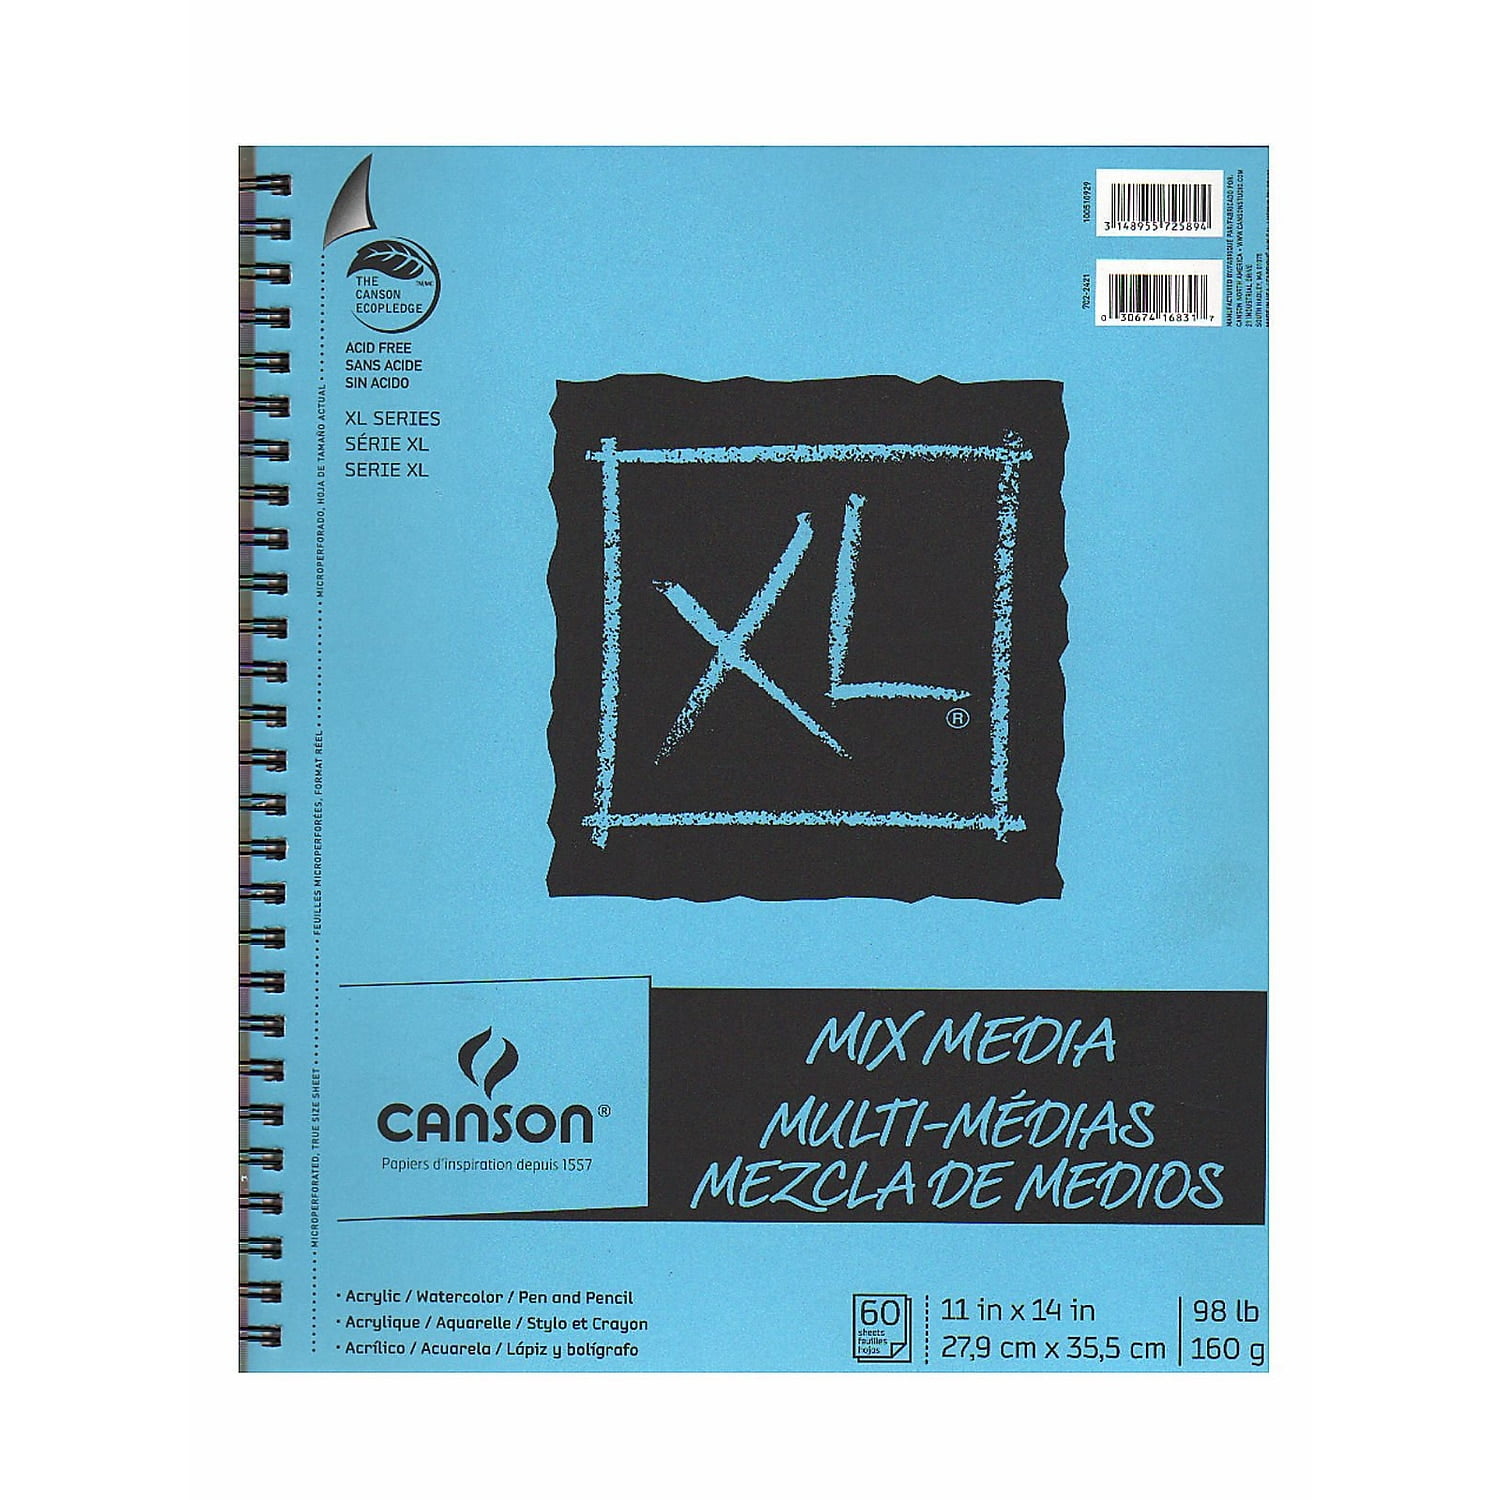 60pg Blank XL Mix Media Sketchbook 9x12 - Mondo Llama 1 ct